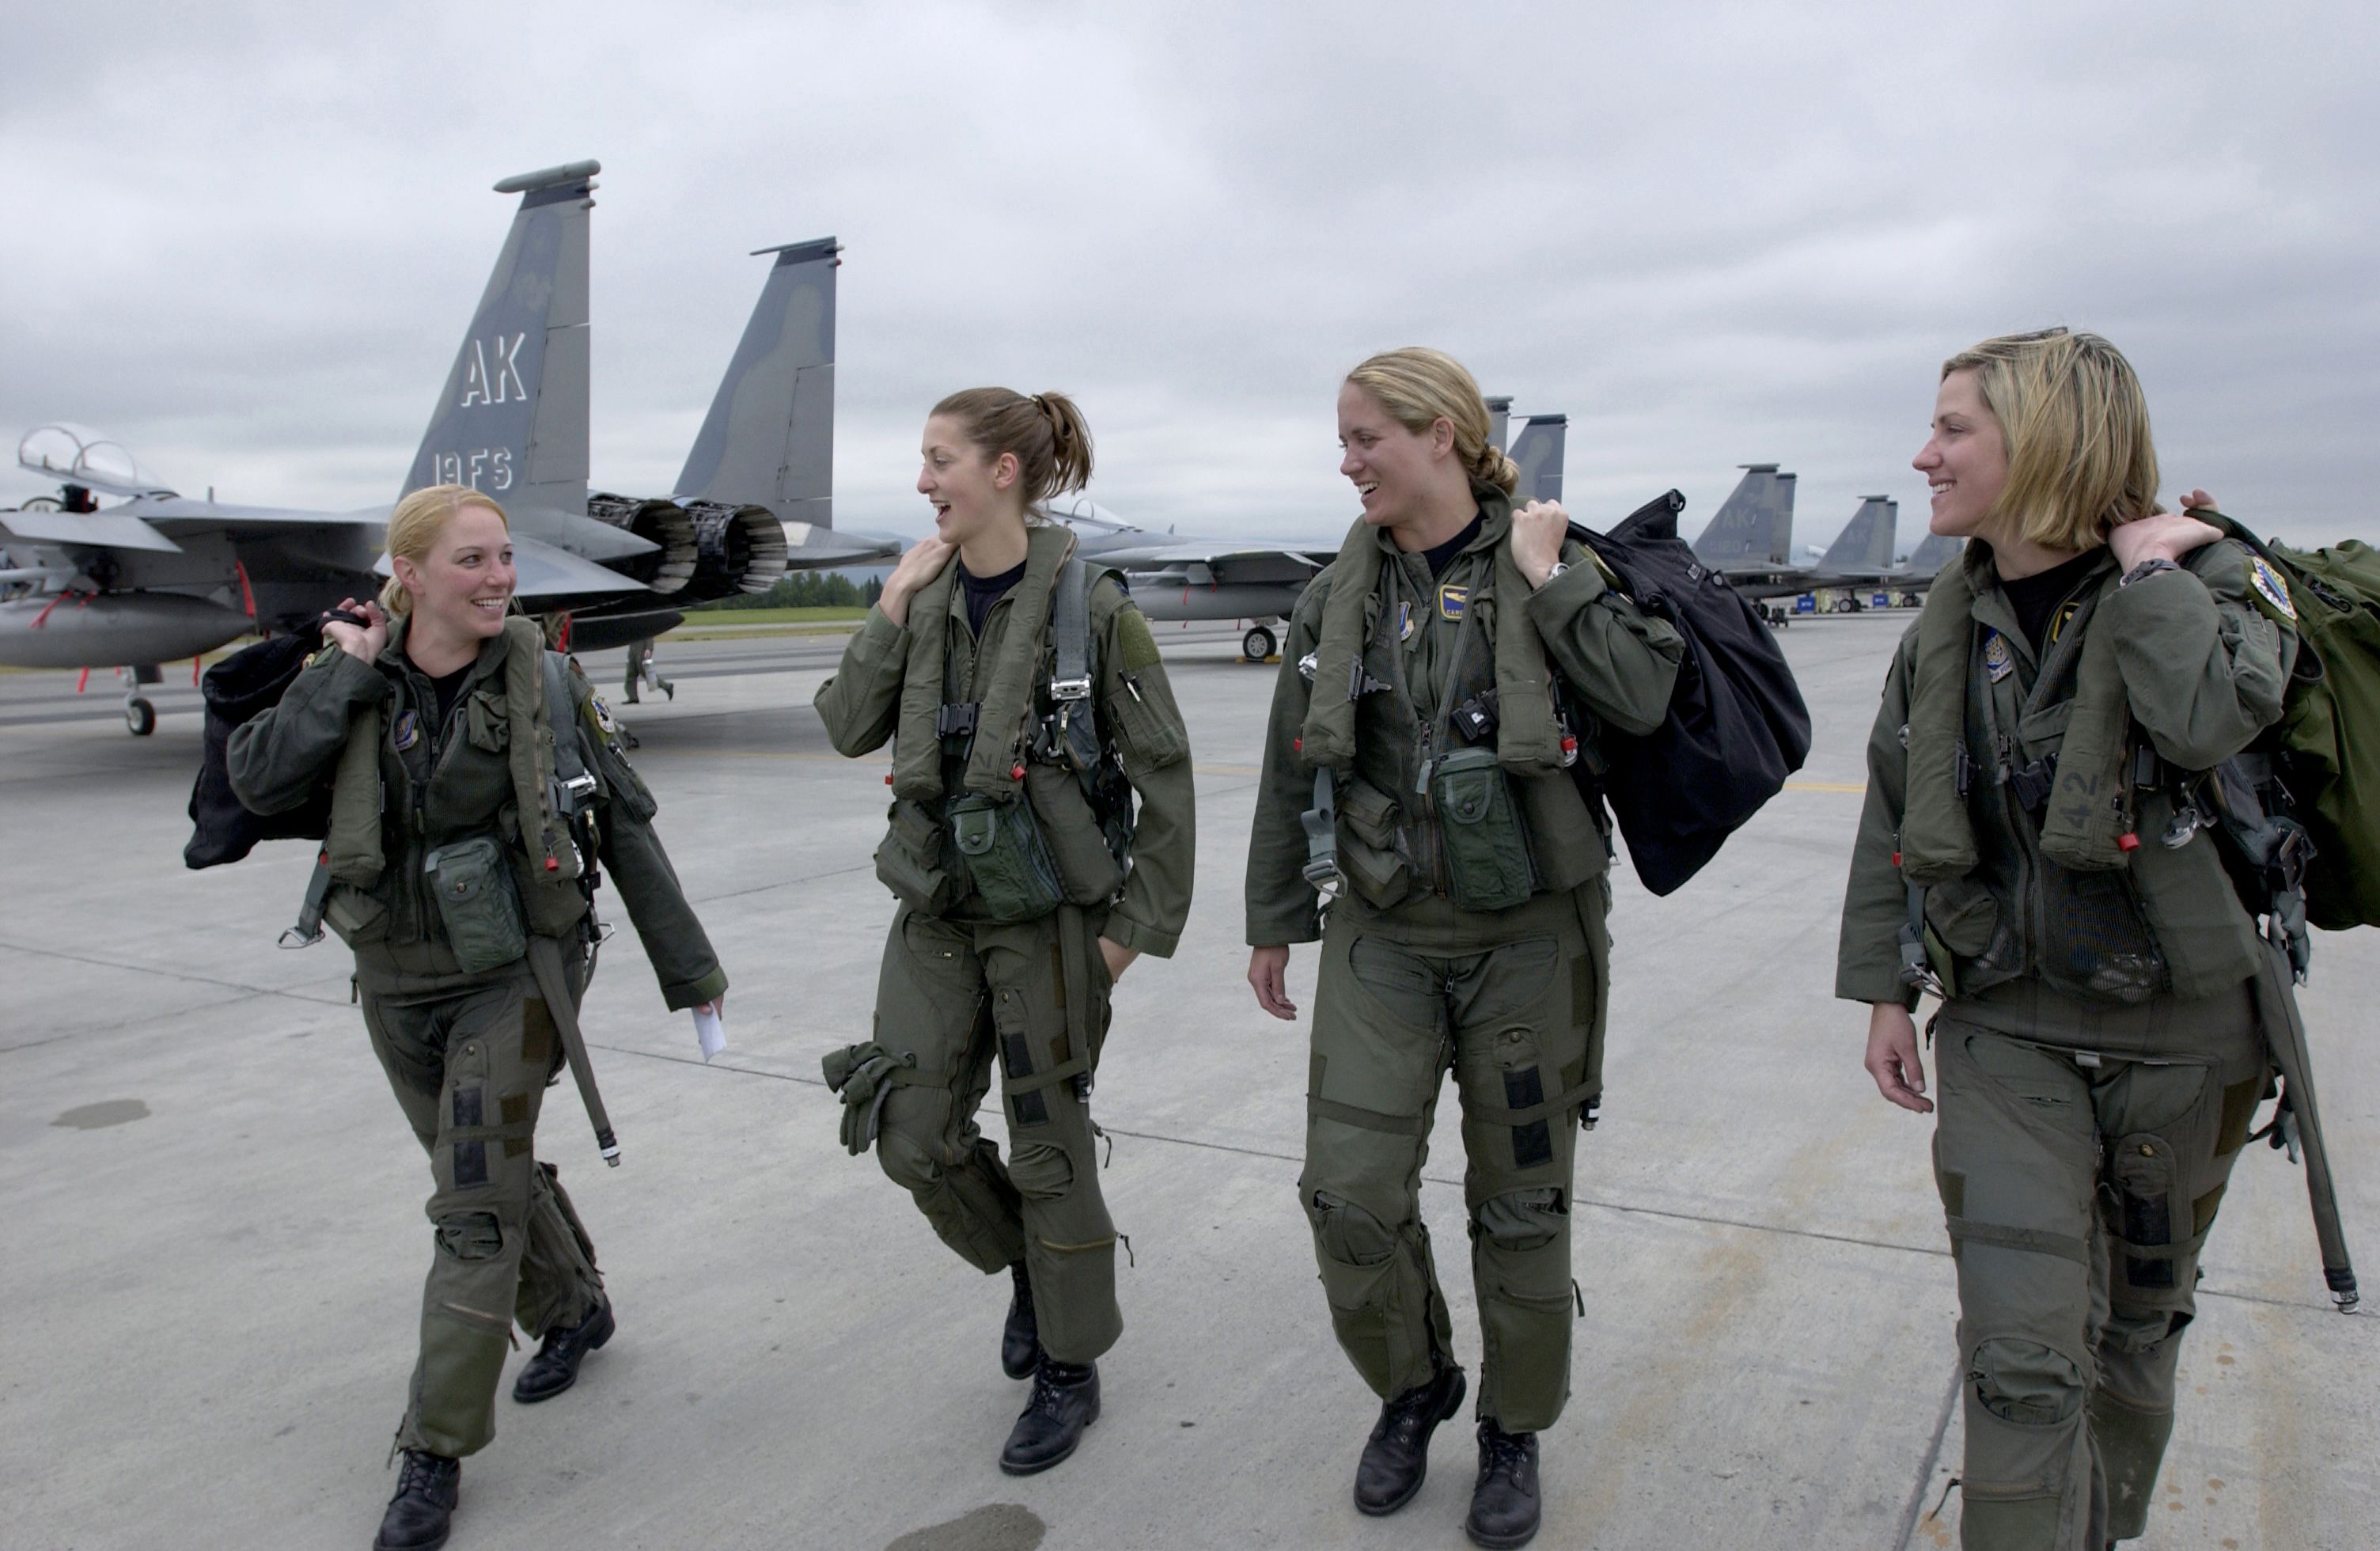 4 women military pilots walking away from jet